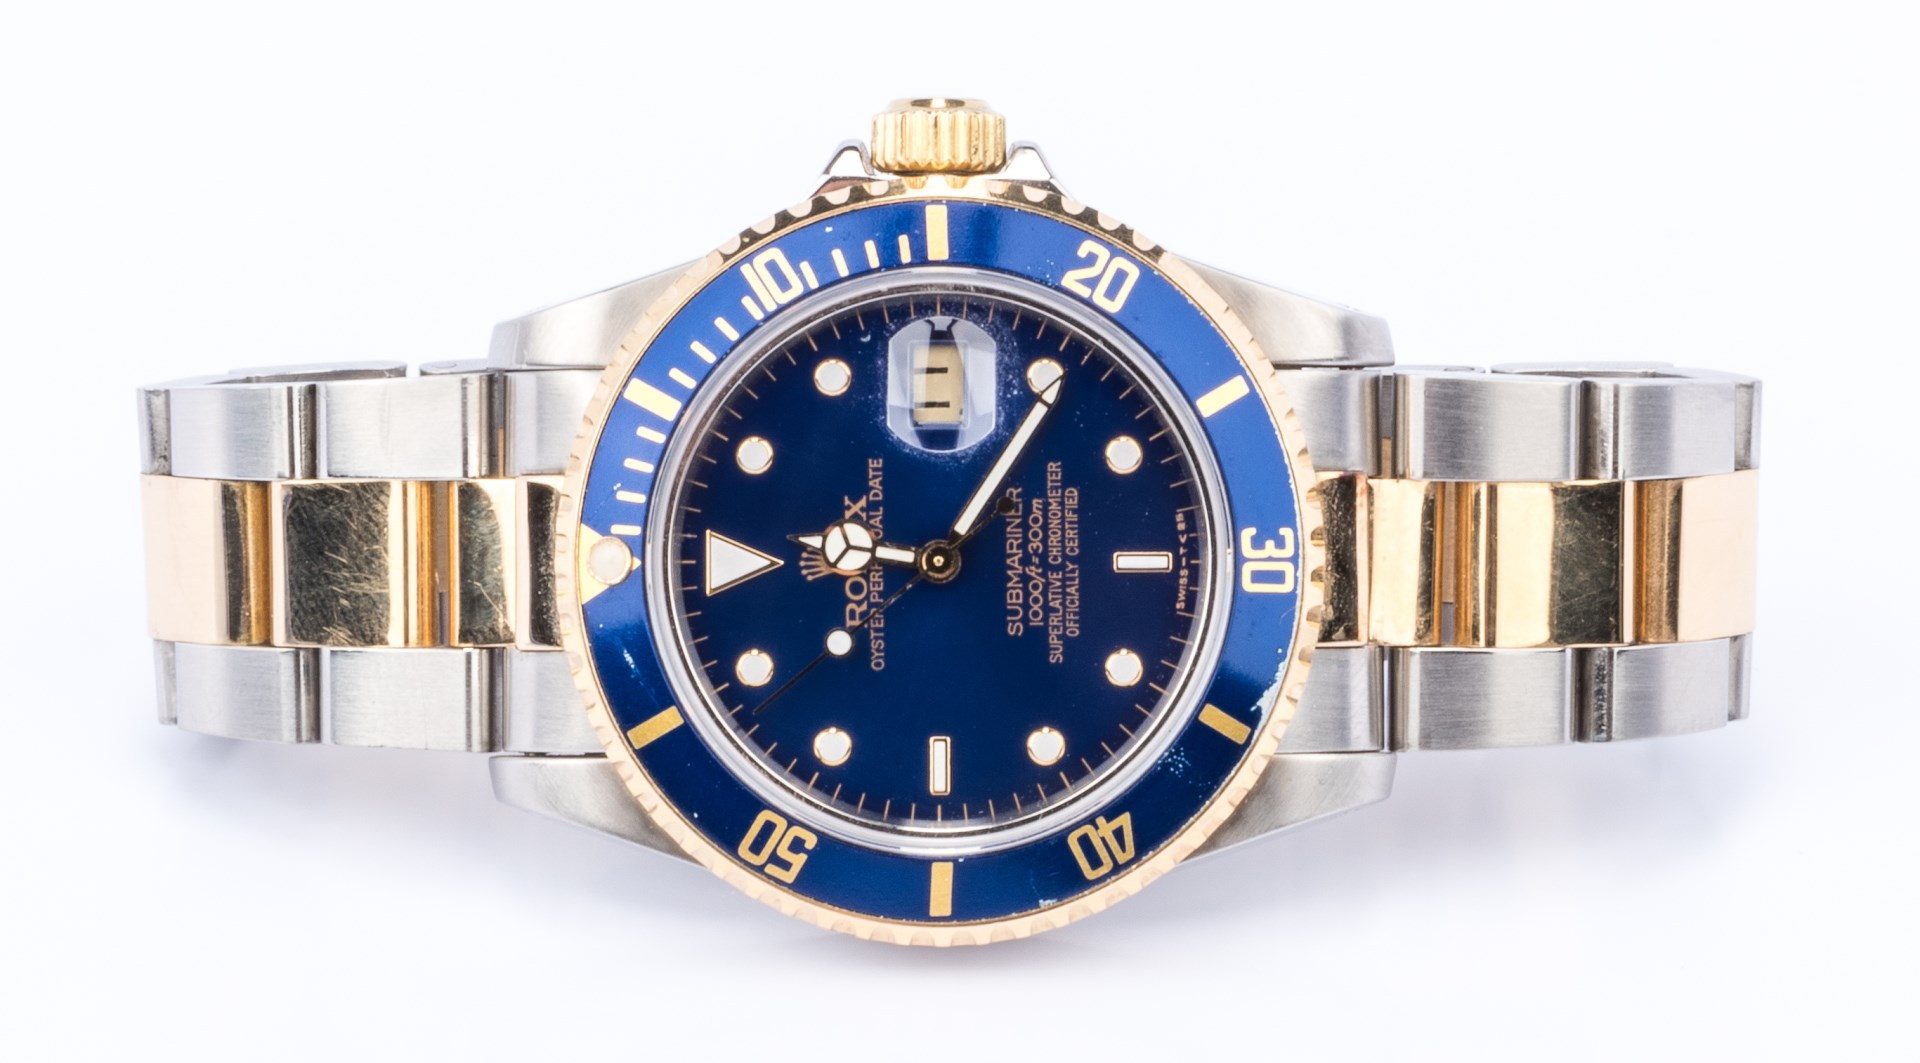 Lot 41: Gents Rolex 18K/Steel Submariner Blue face